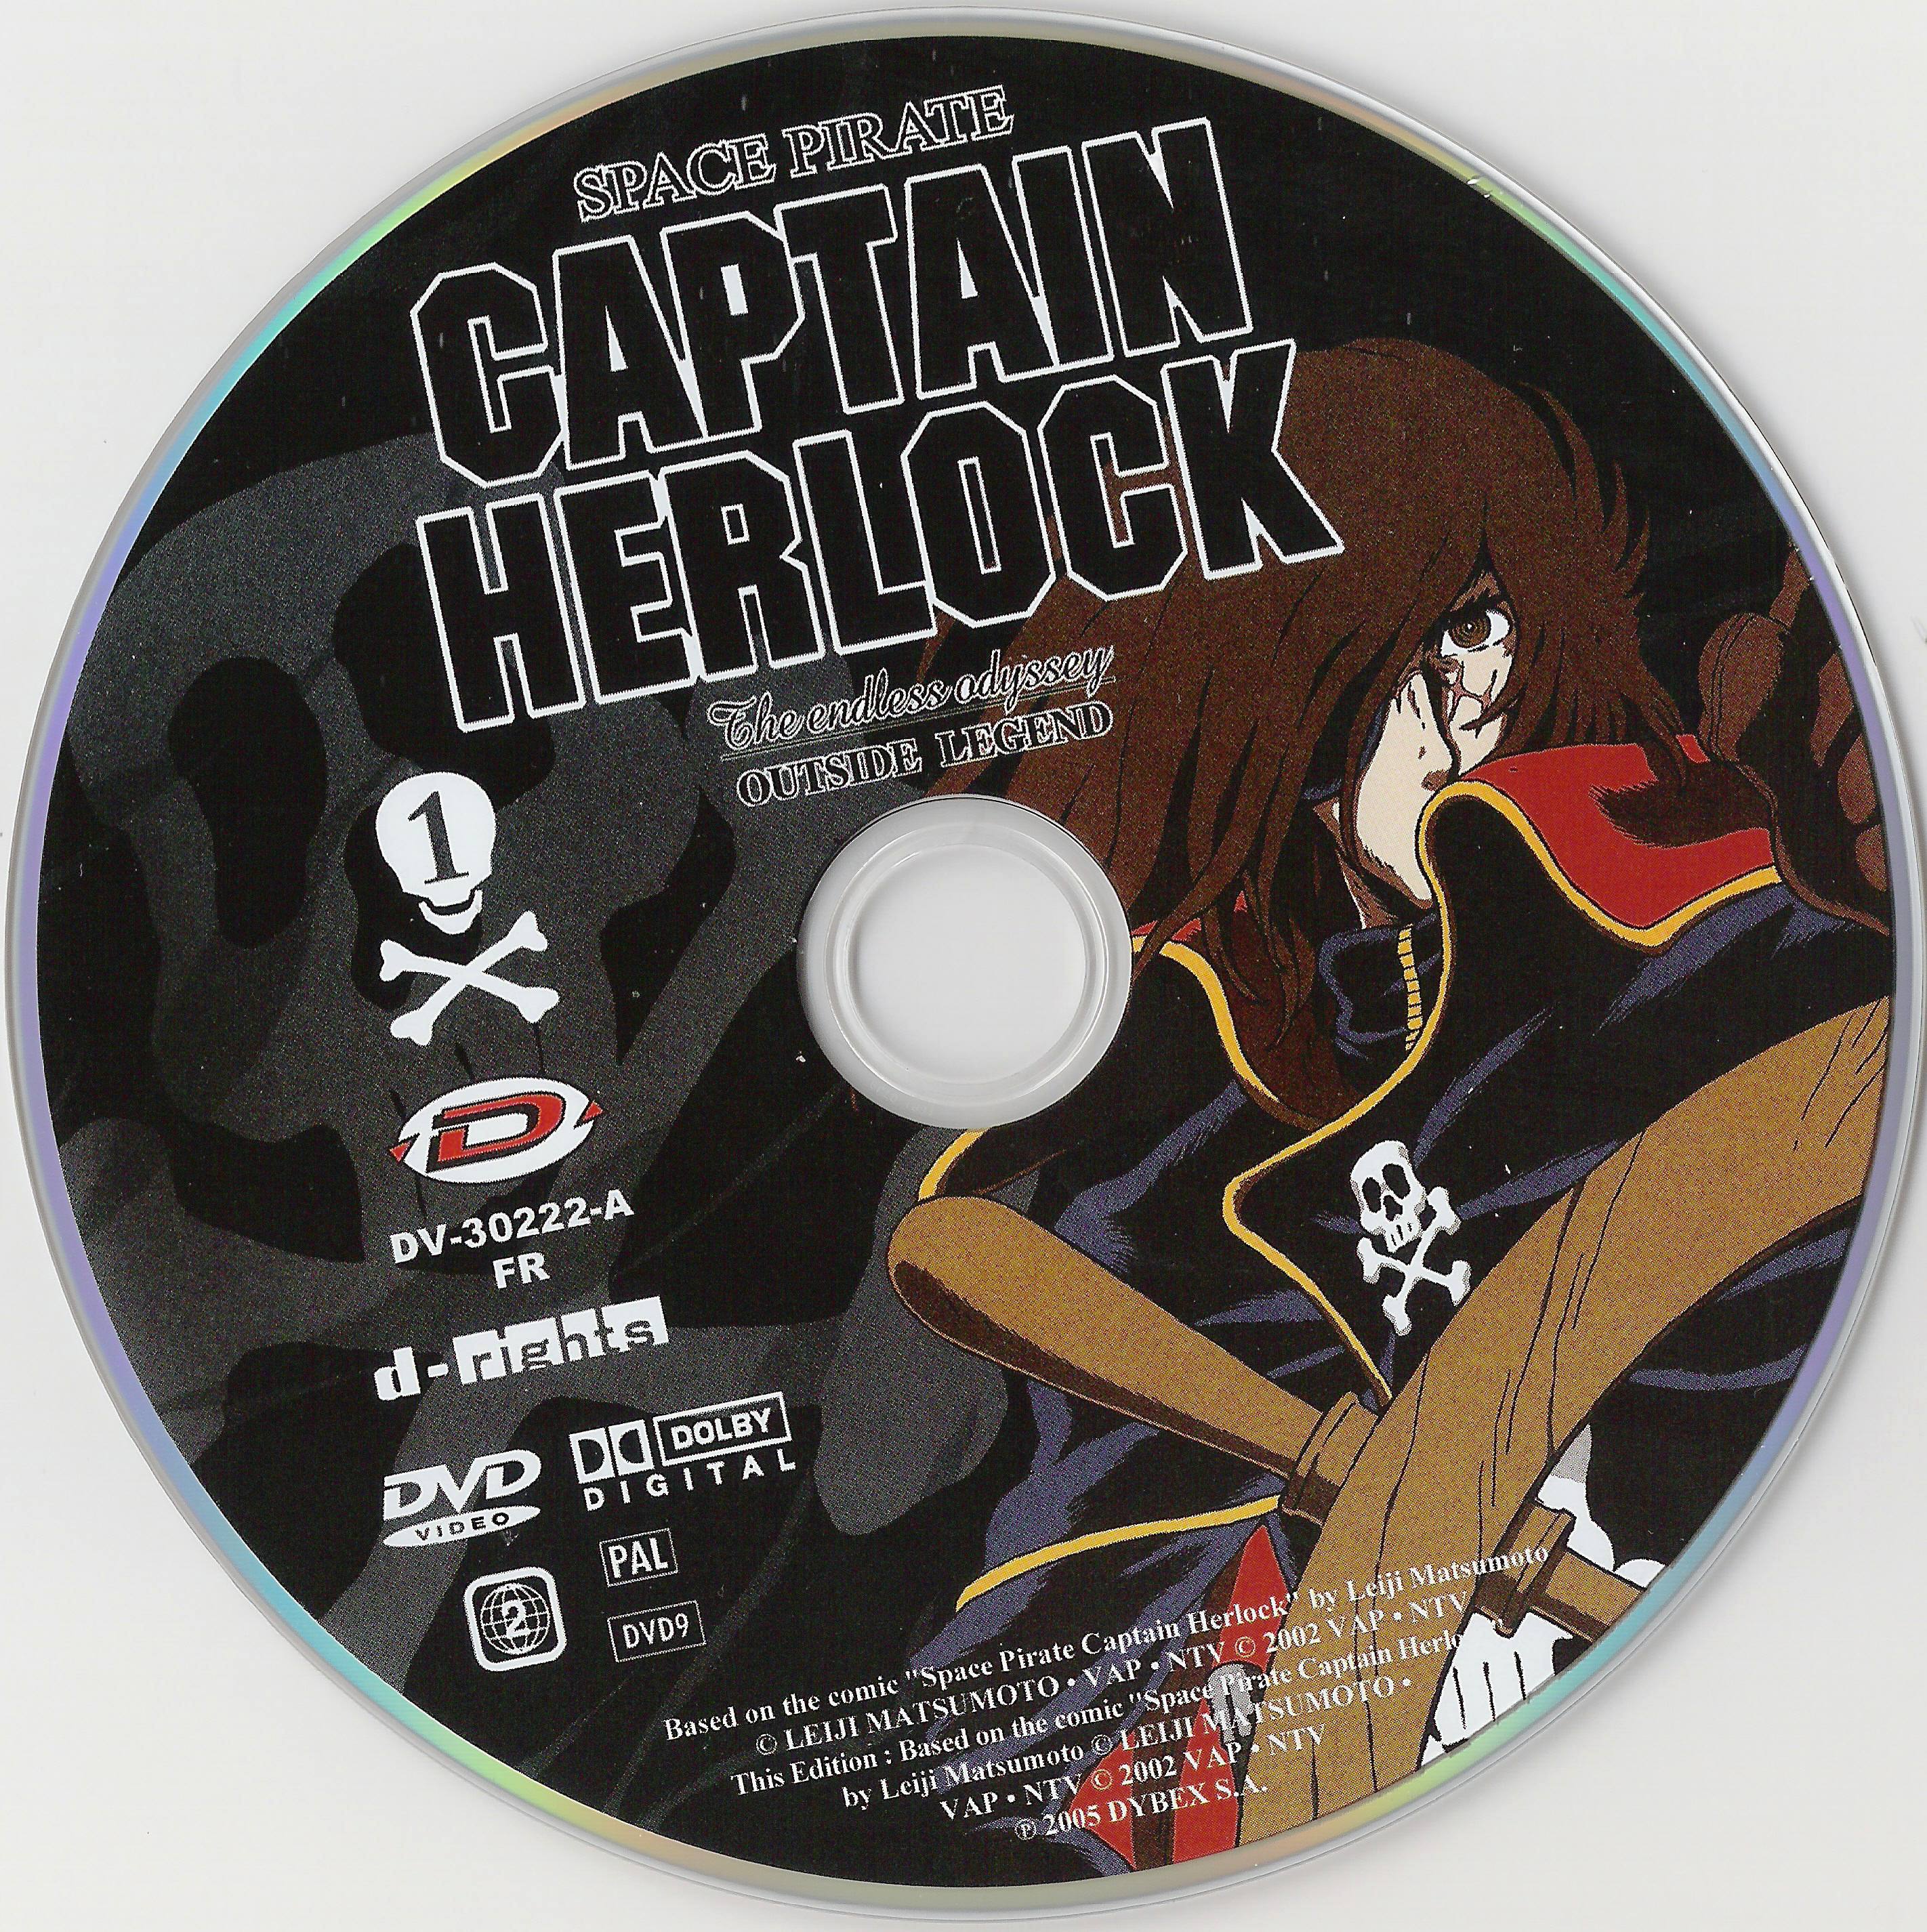 Captain Herlock The endless odyssey DVD 1